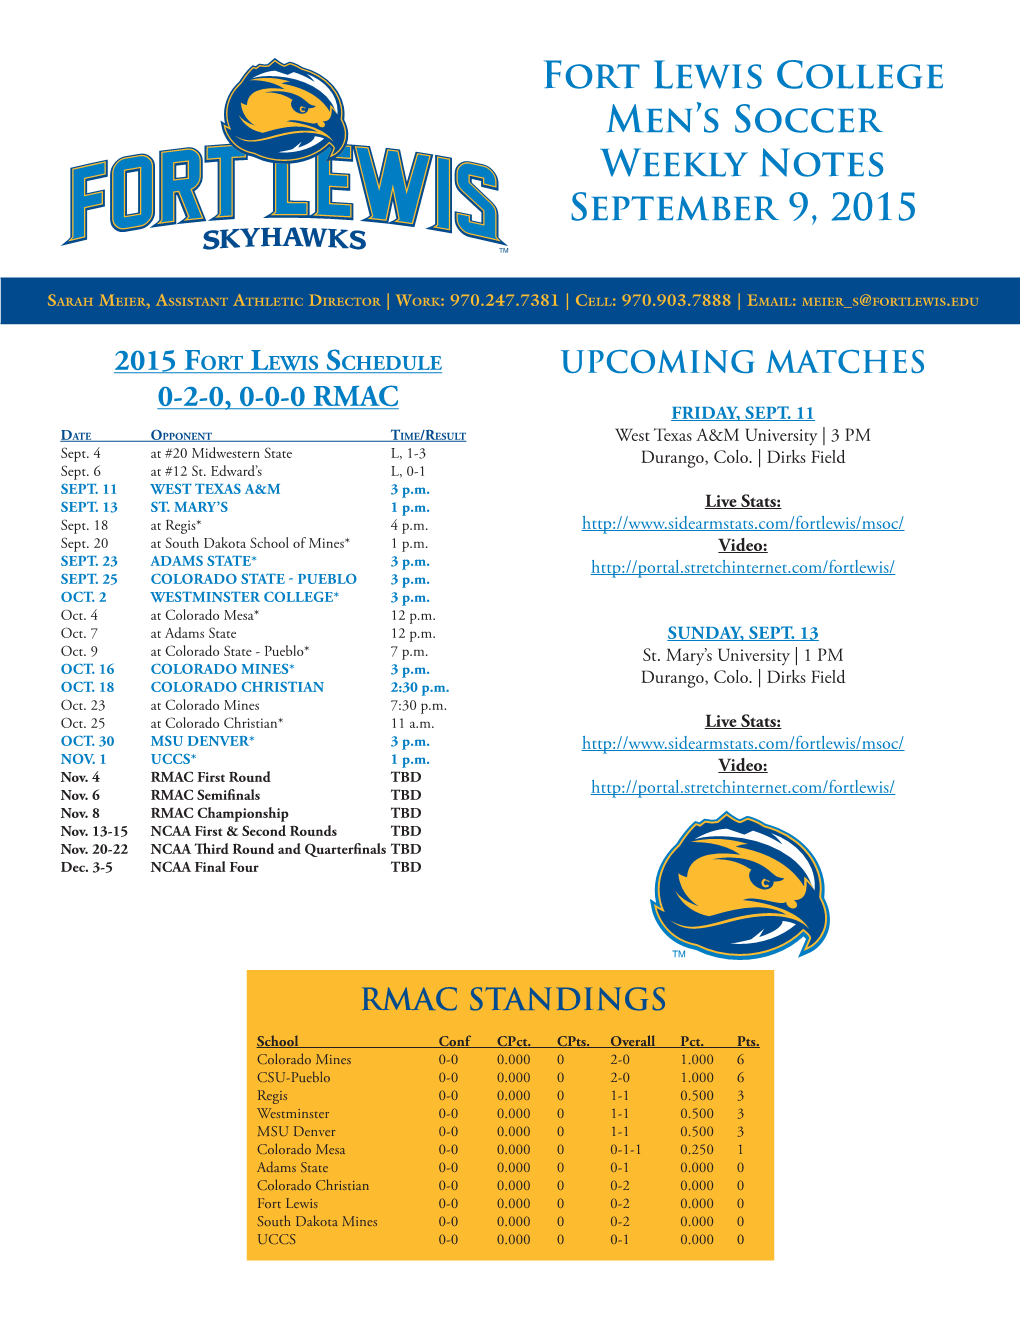 Fort Lewis College Men's Soccer Weekly Notes September 9, 2015